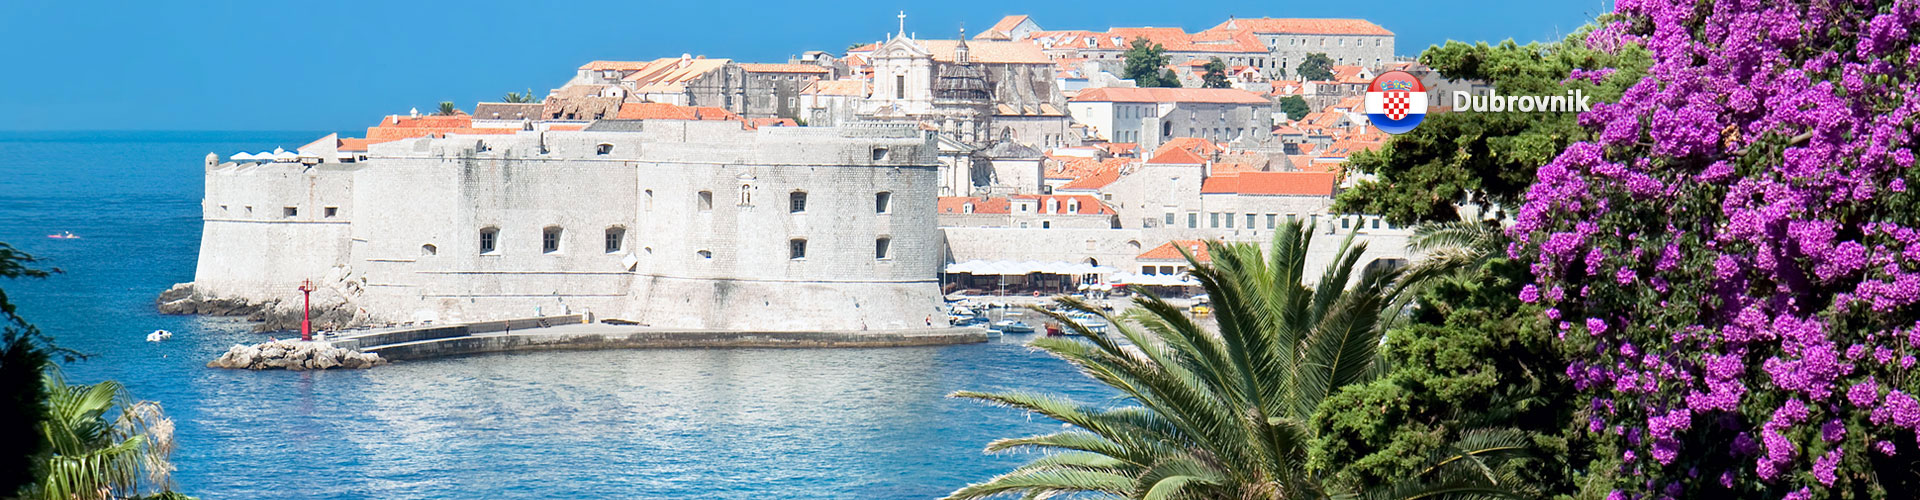 Popular destination Dubrovnik - CroatiaFind.com